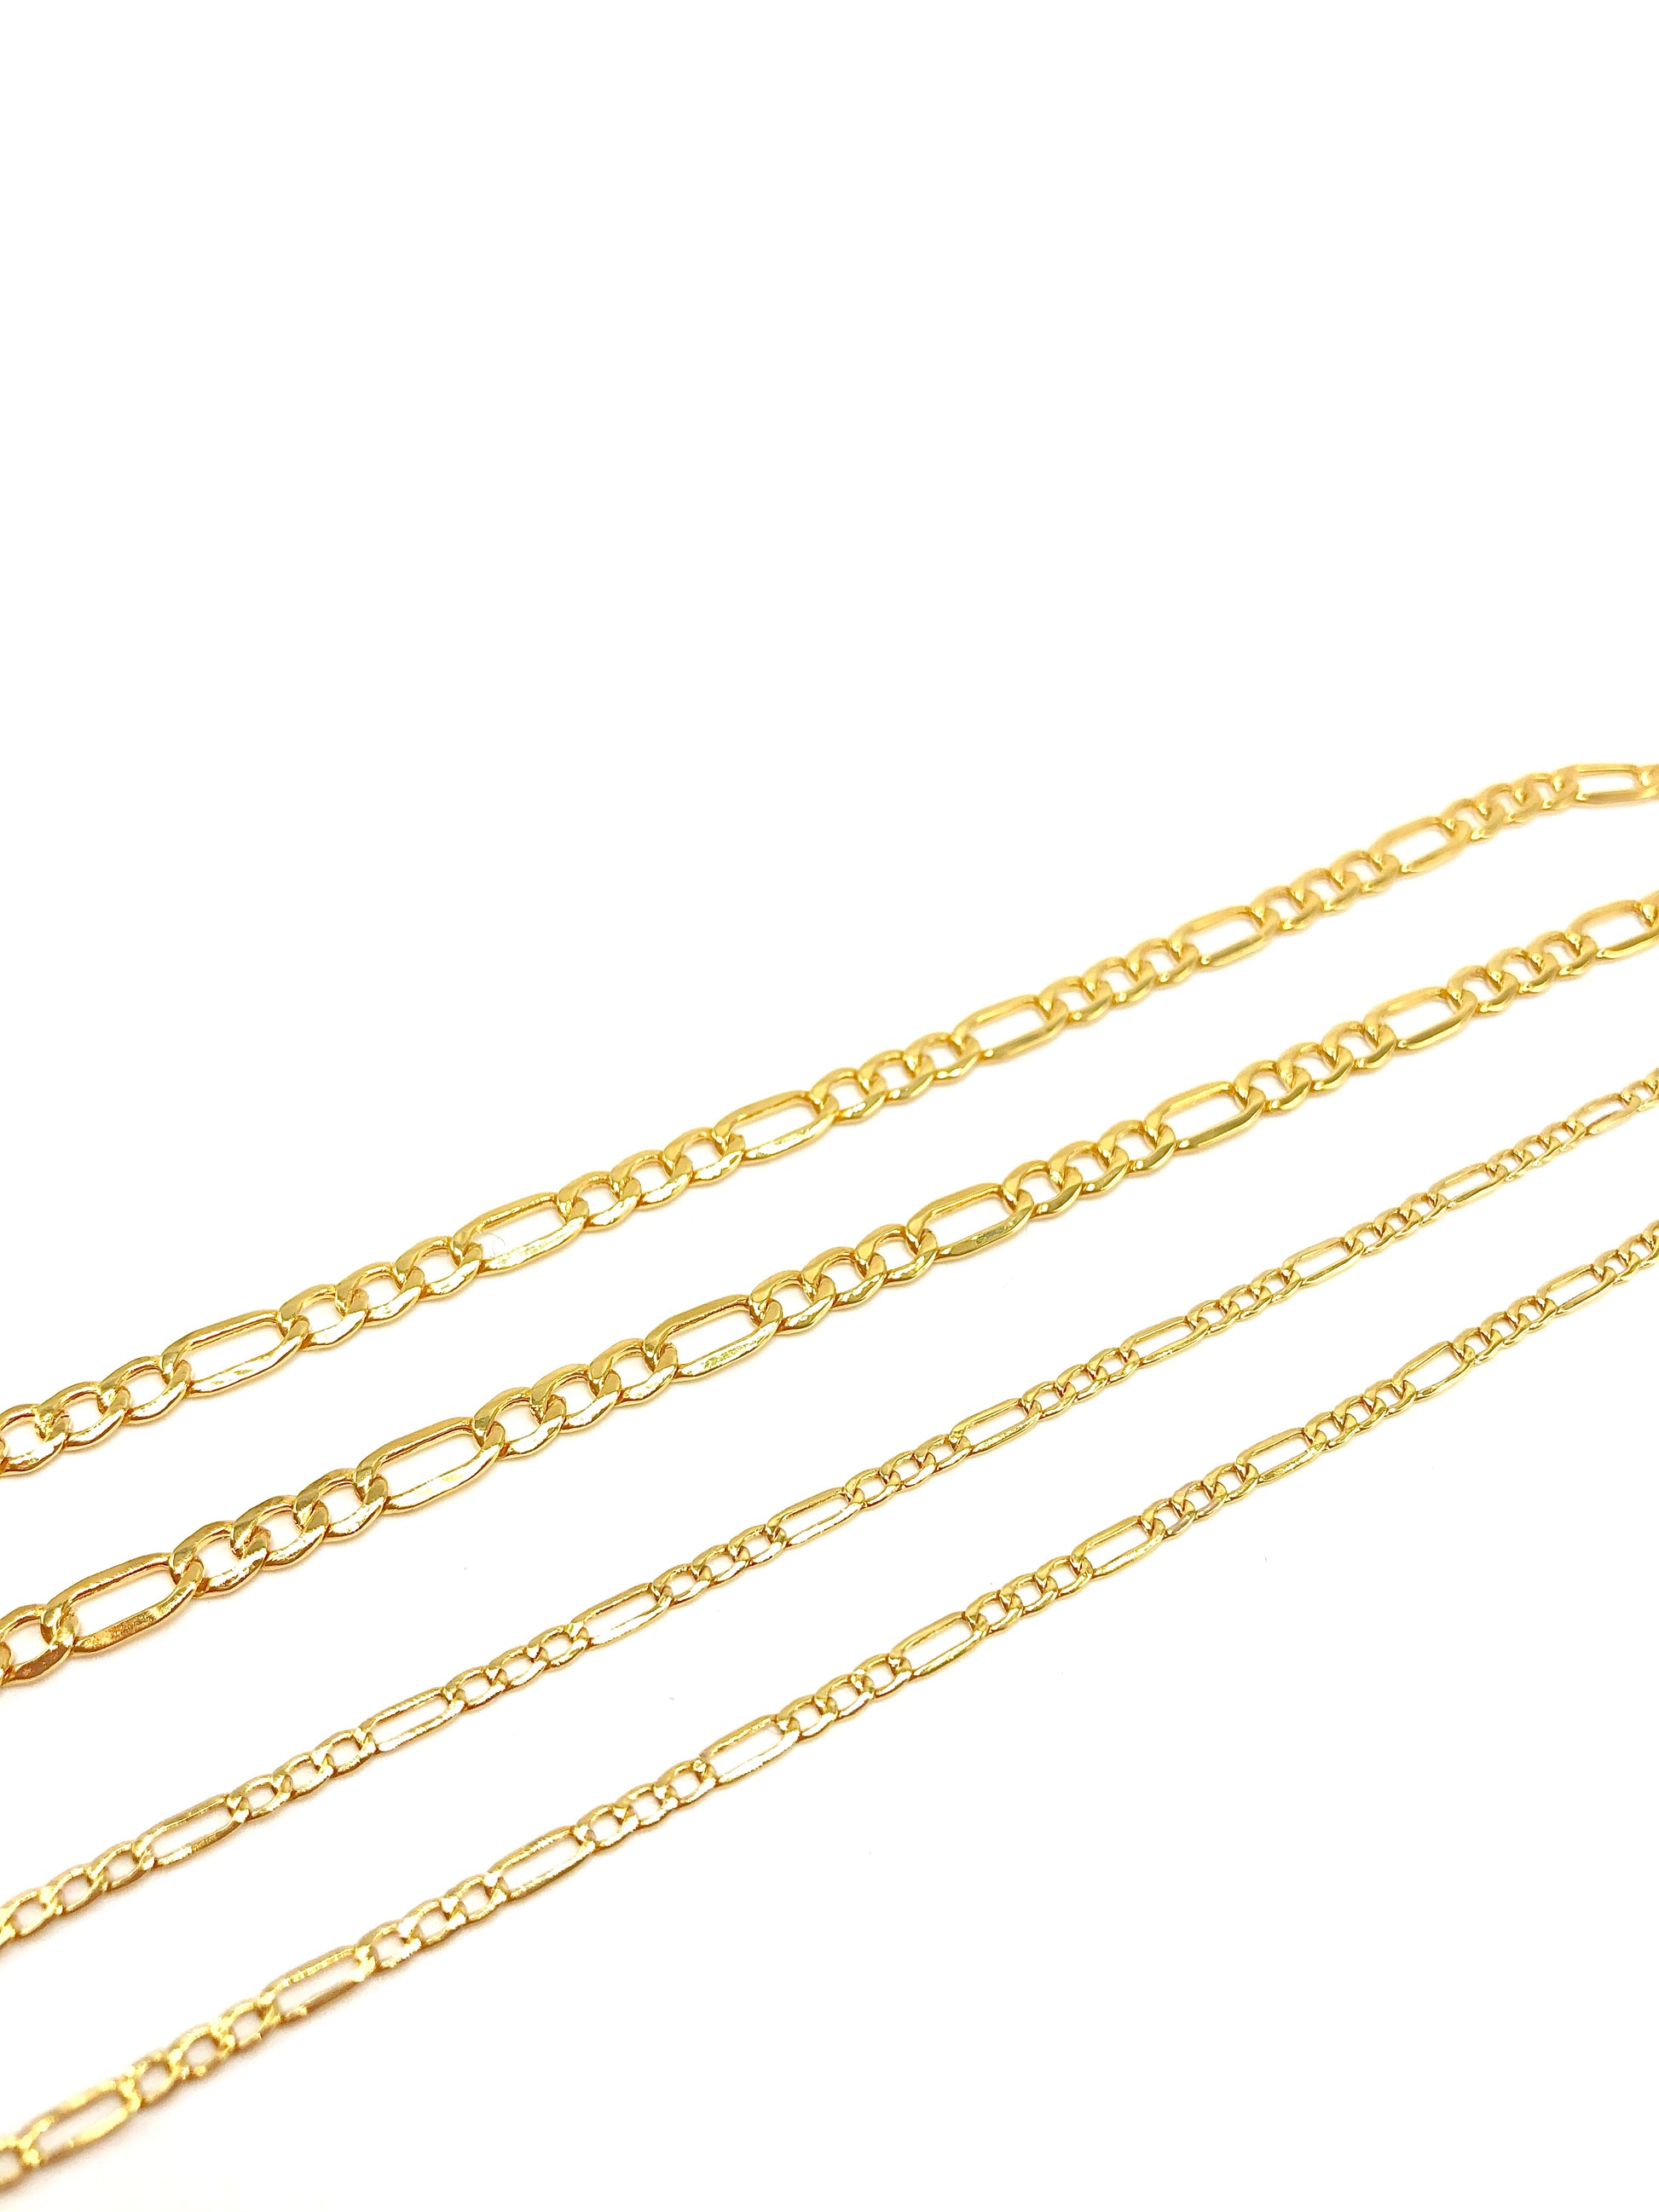 10K Gold Figaro Chain 2.55mm-3.5mm